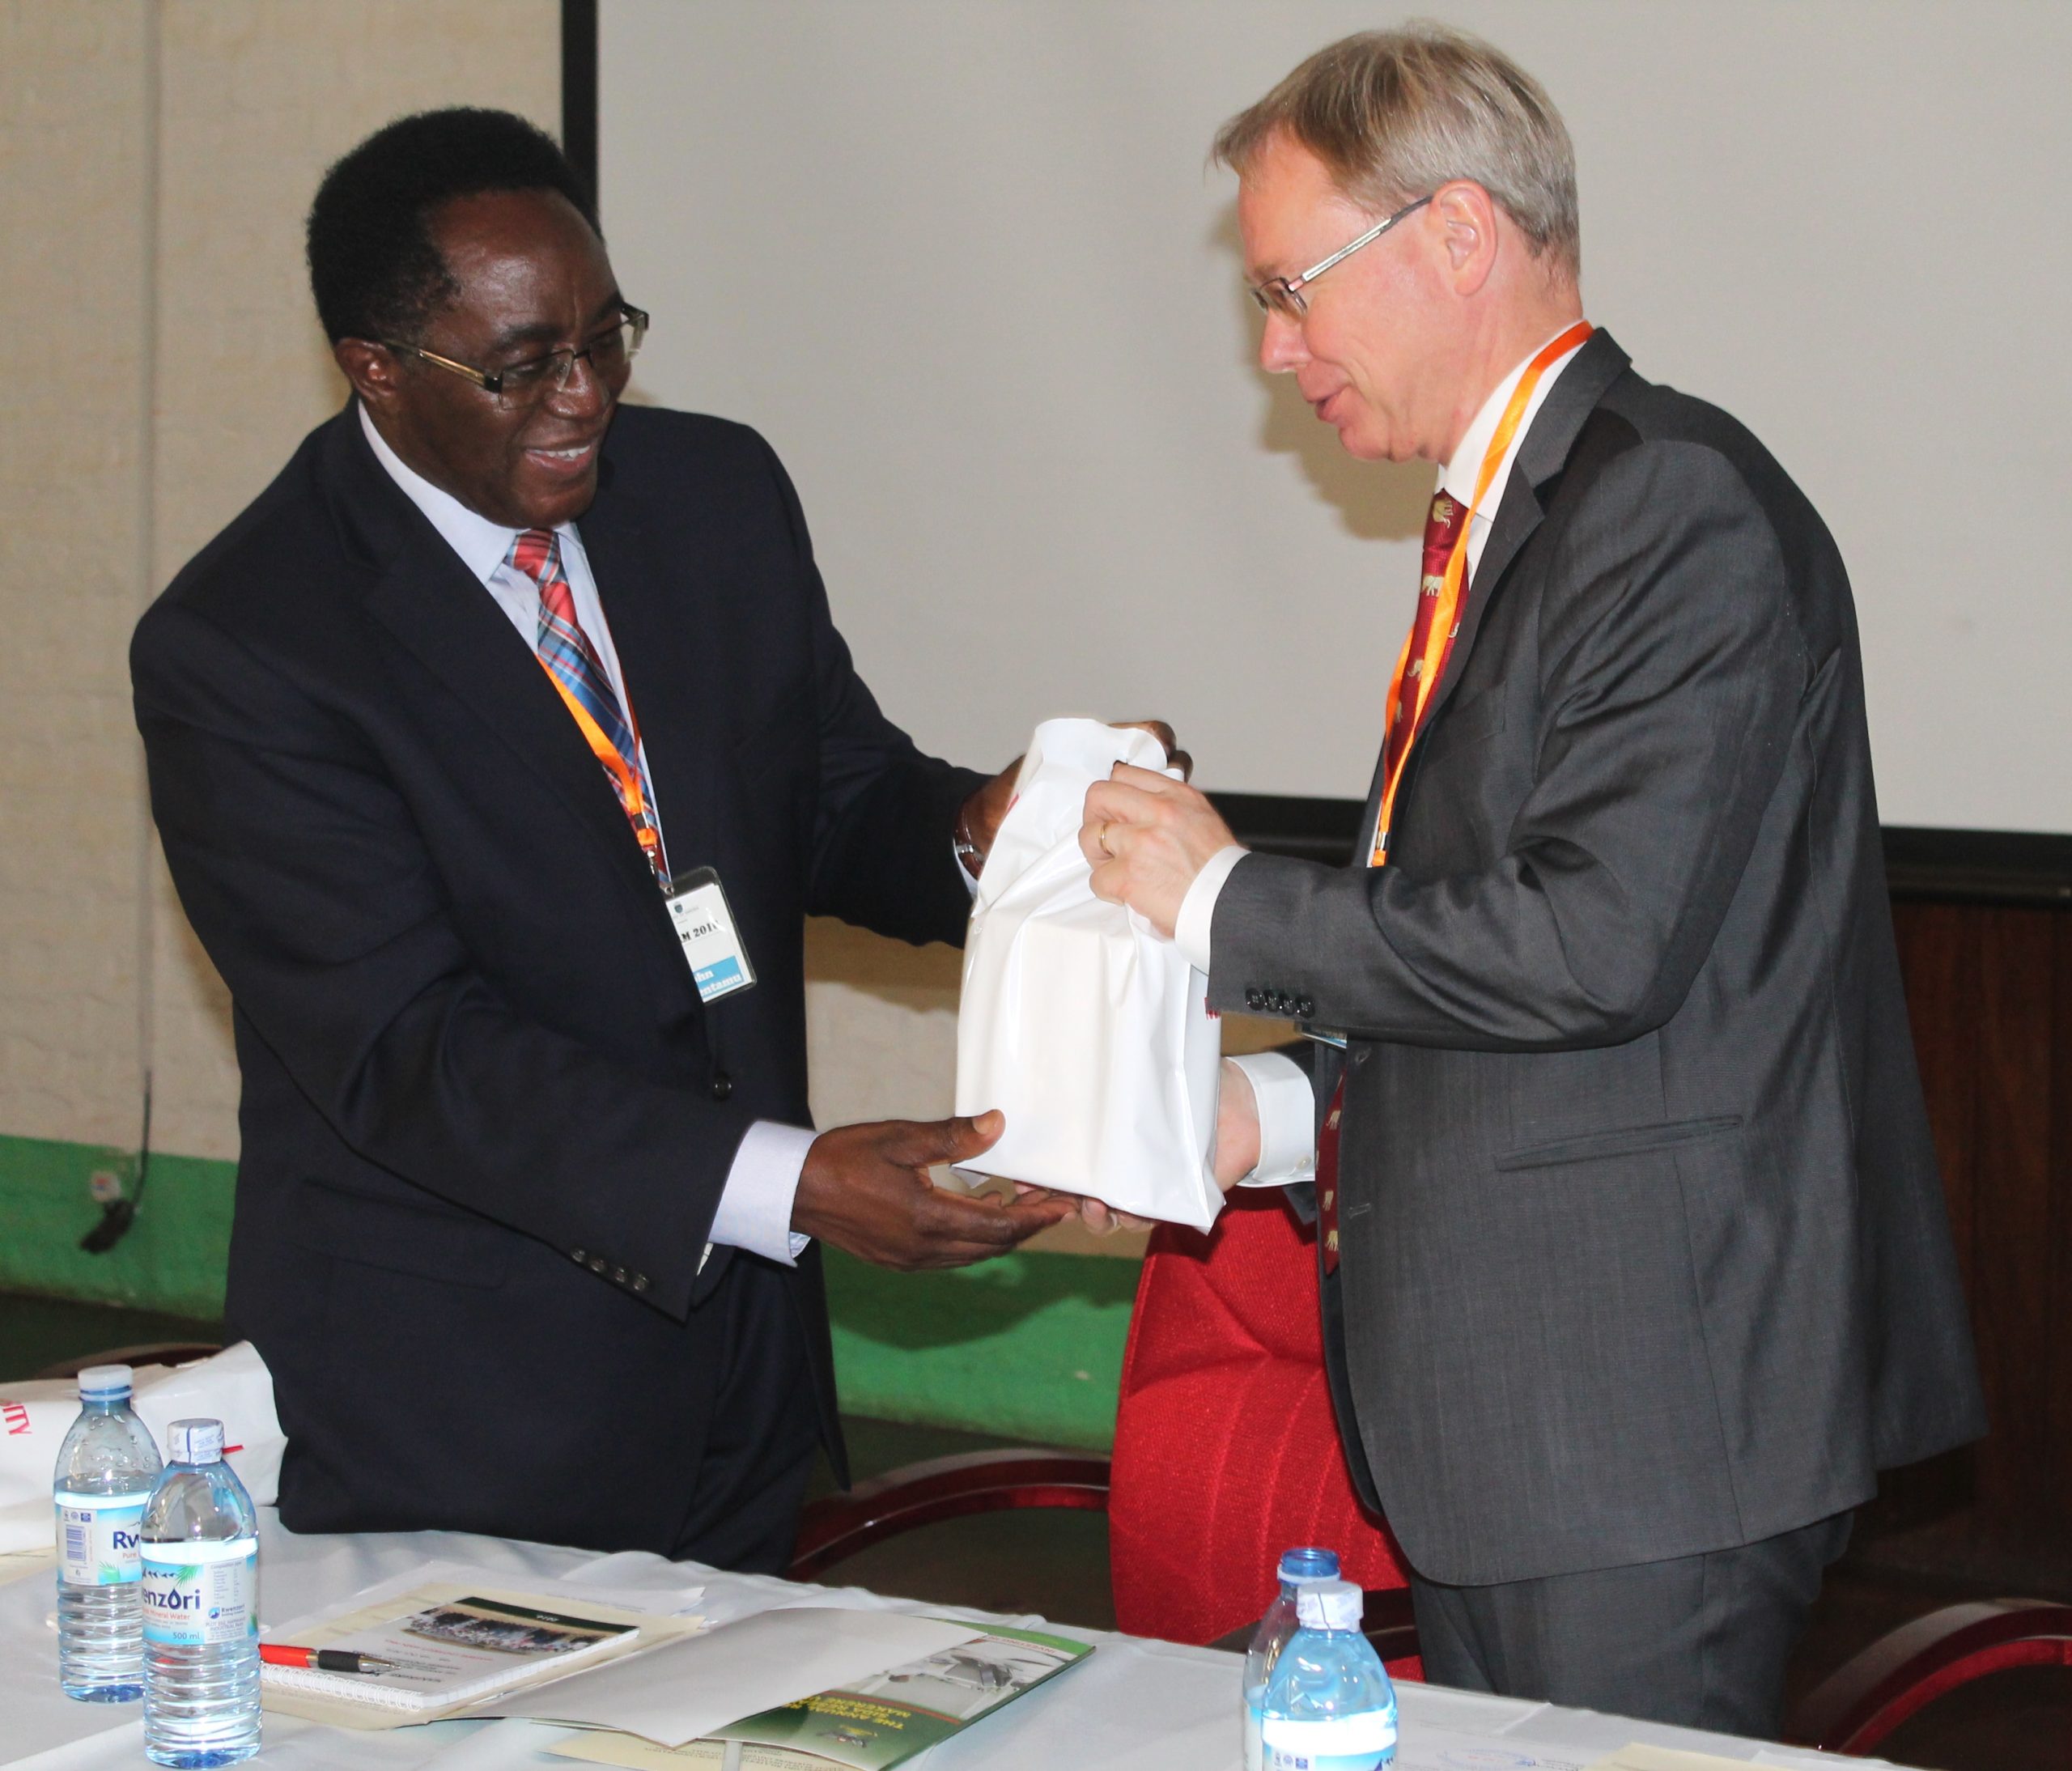 New Swedish ambassador in Uganda, Per Lindgarde,  being given a gift by Makerere University Vice Chancellor Prof John Ddumba-Ssentamu